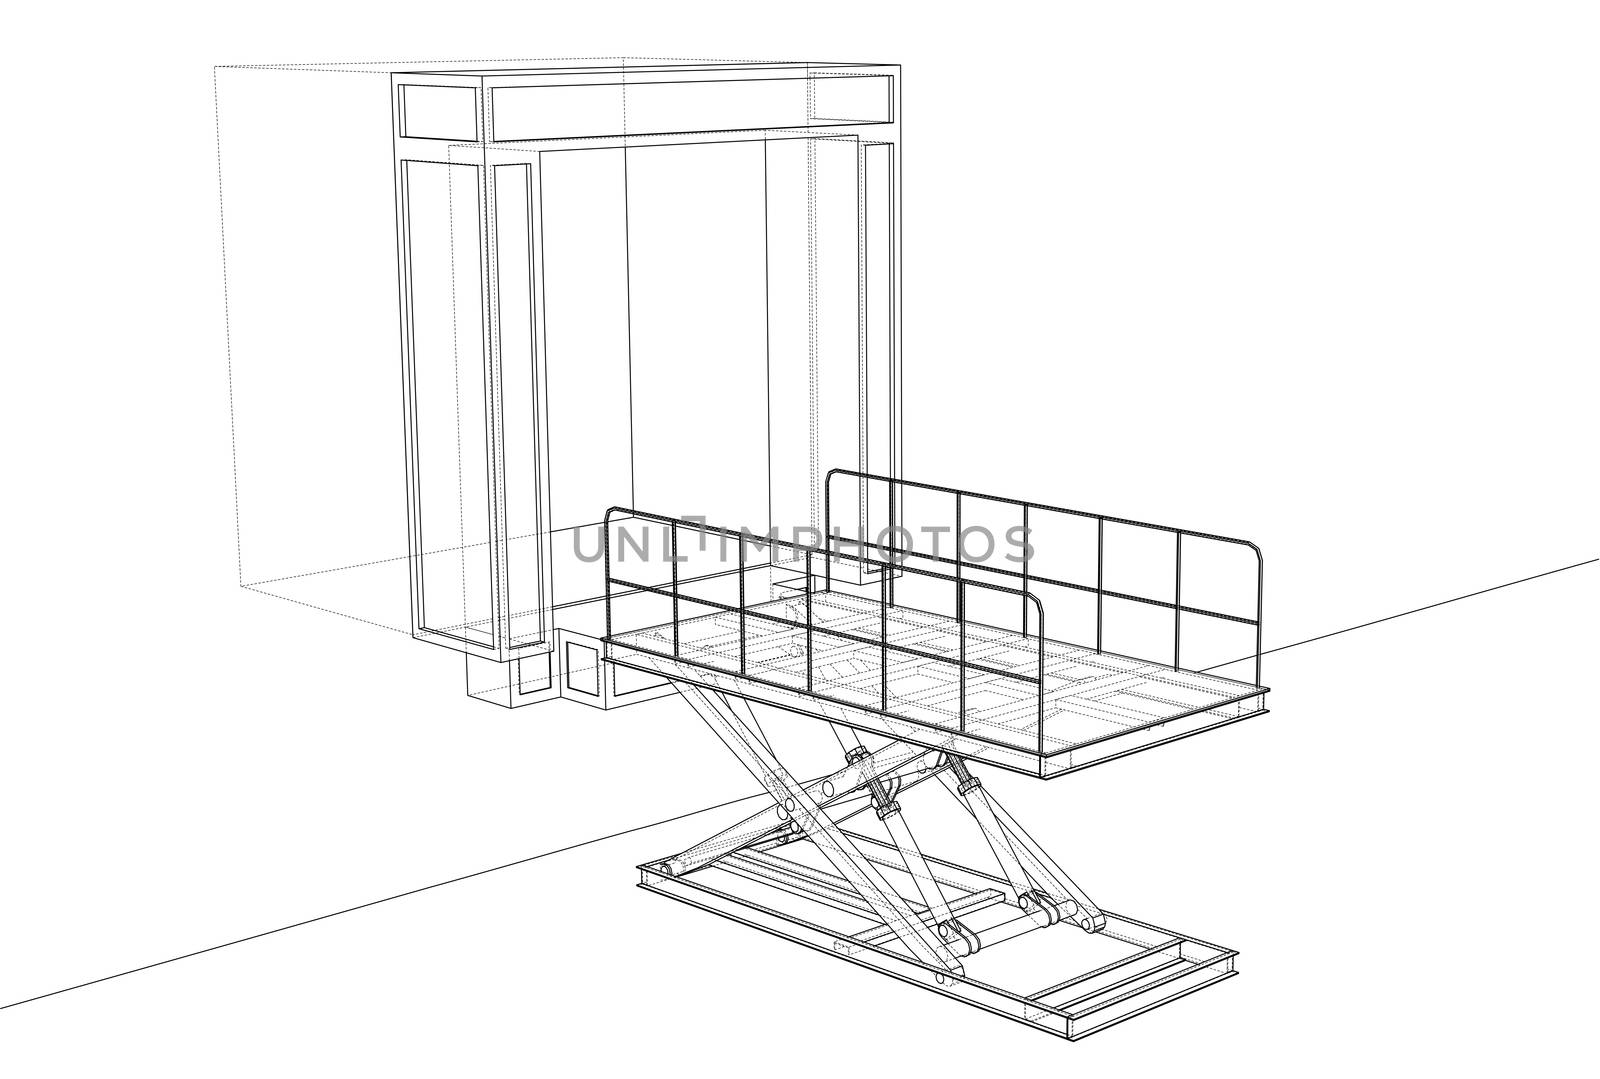 Dock leveler concept. 3d illustration. Wire-frame style